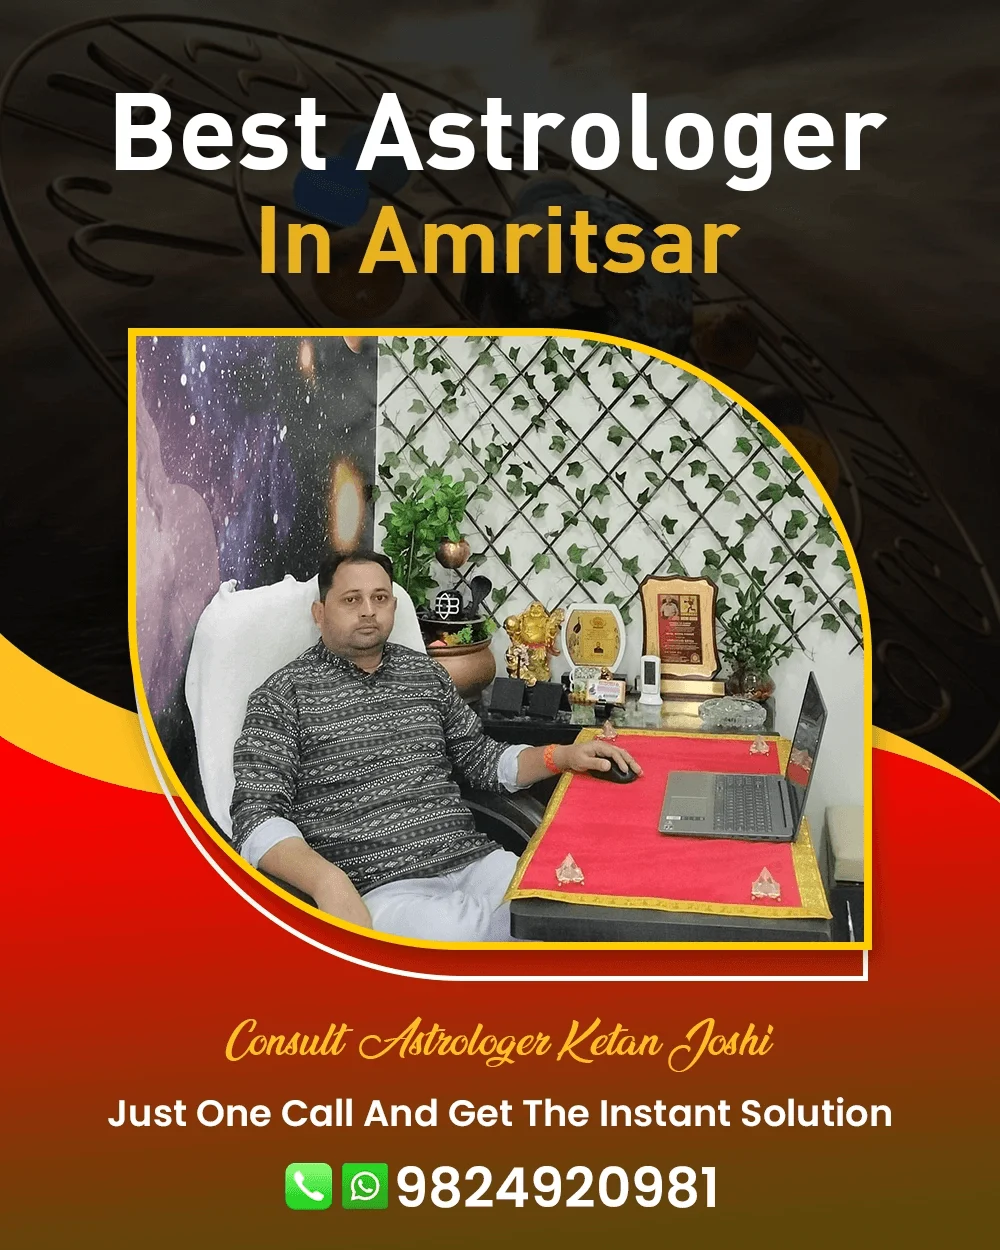 Best Astrologer In Amritsar